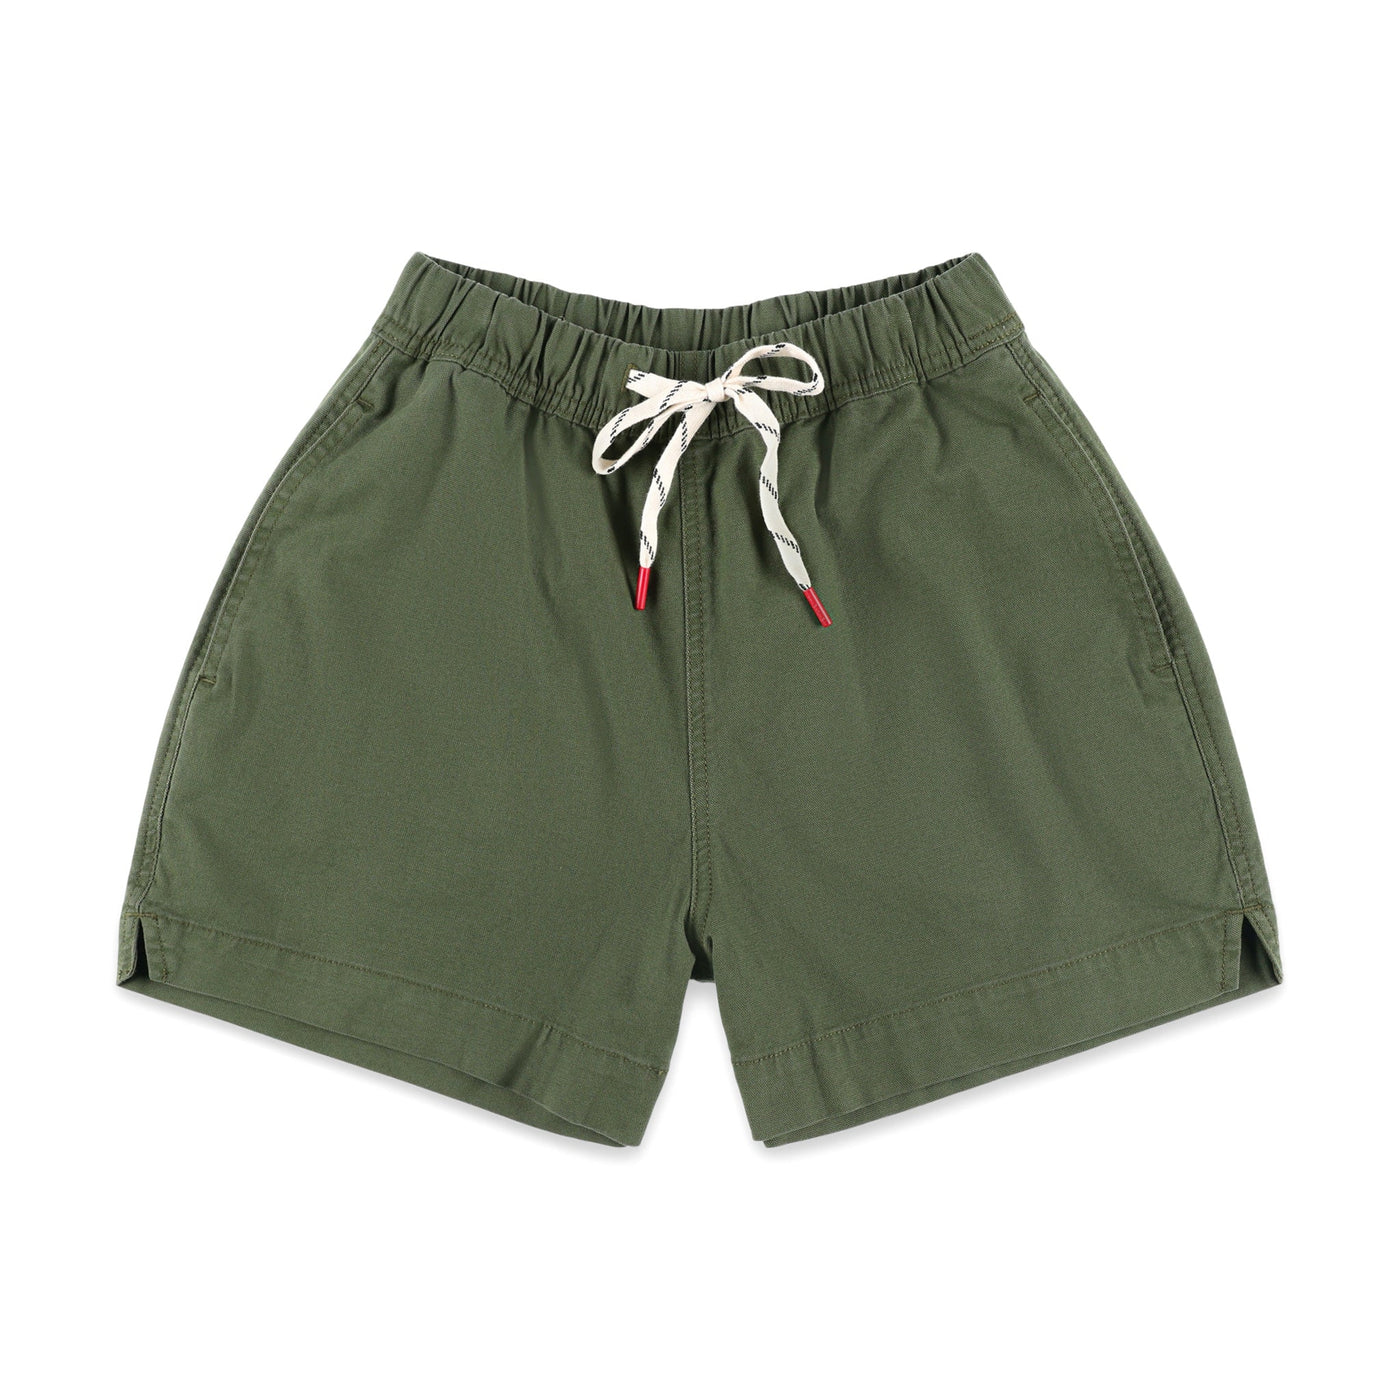 Topo Designs Women's drawstring Dirt Shorts in 100% organic cotton "Olive" green.